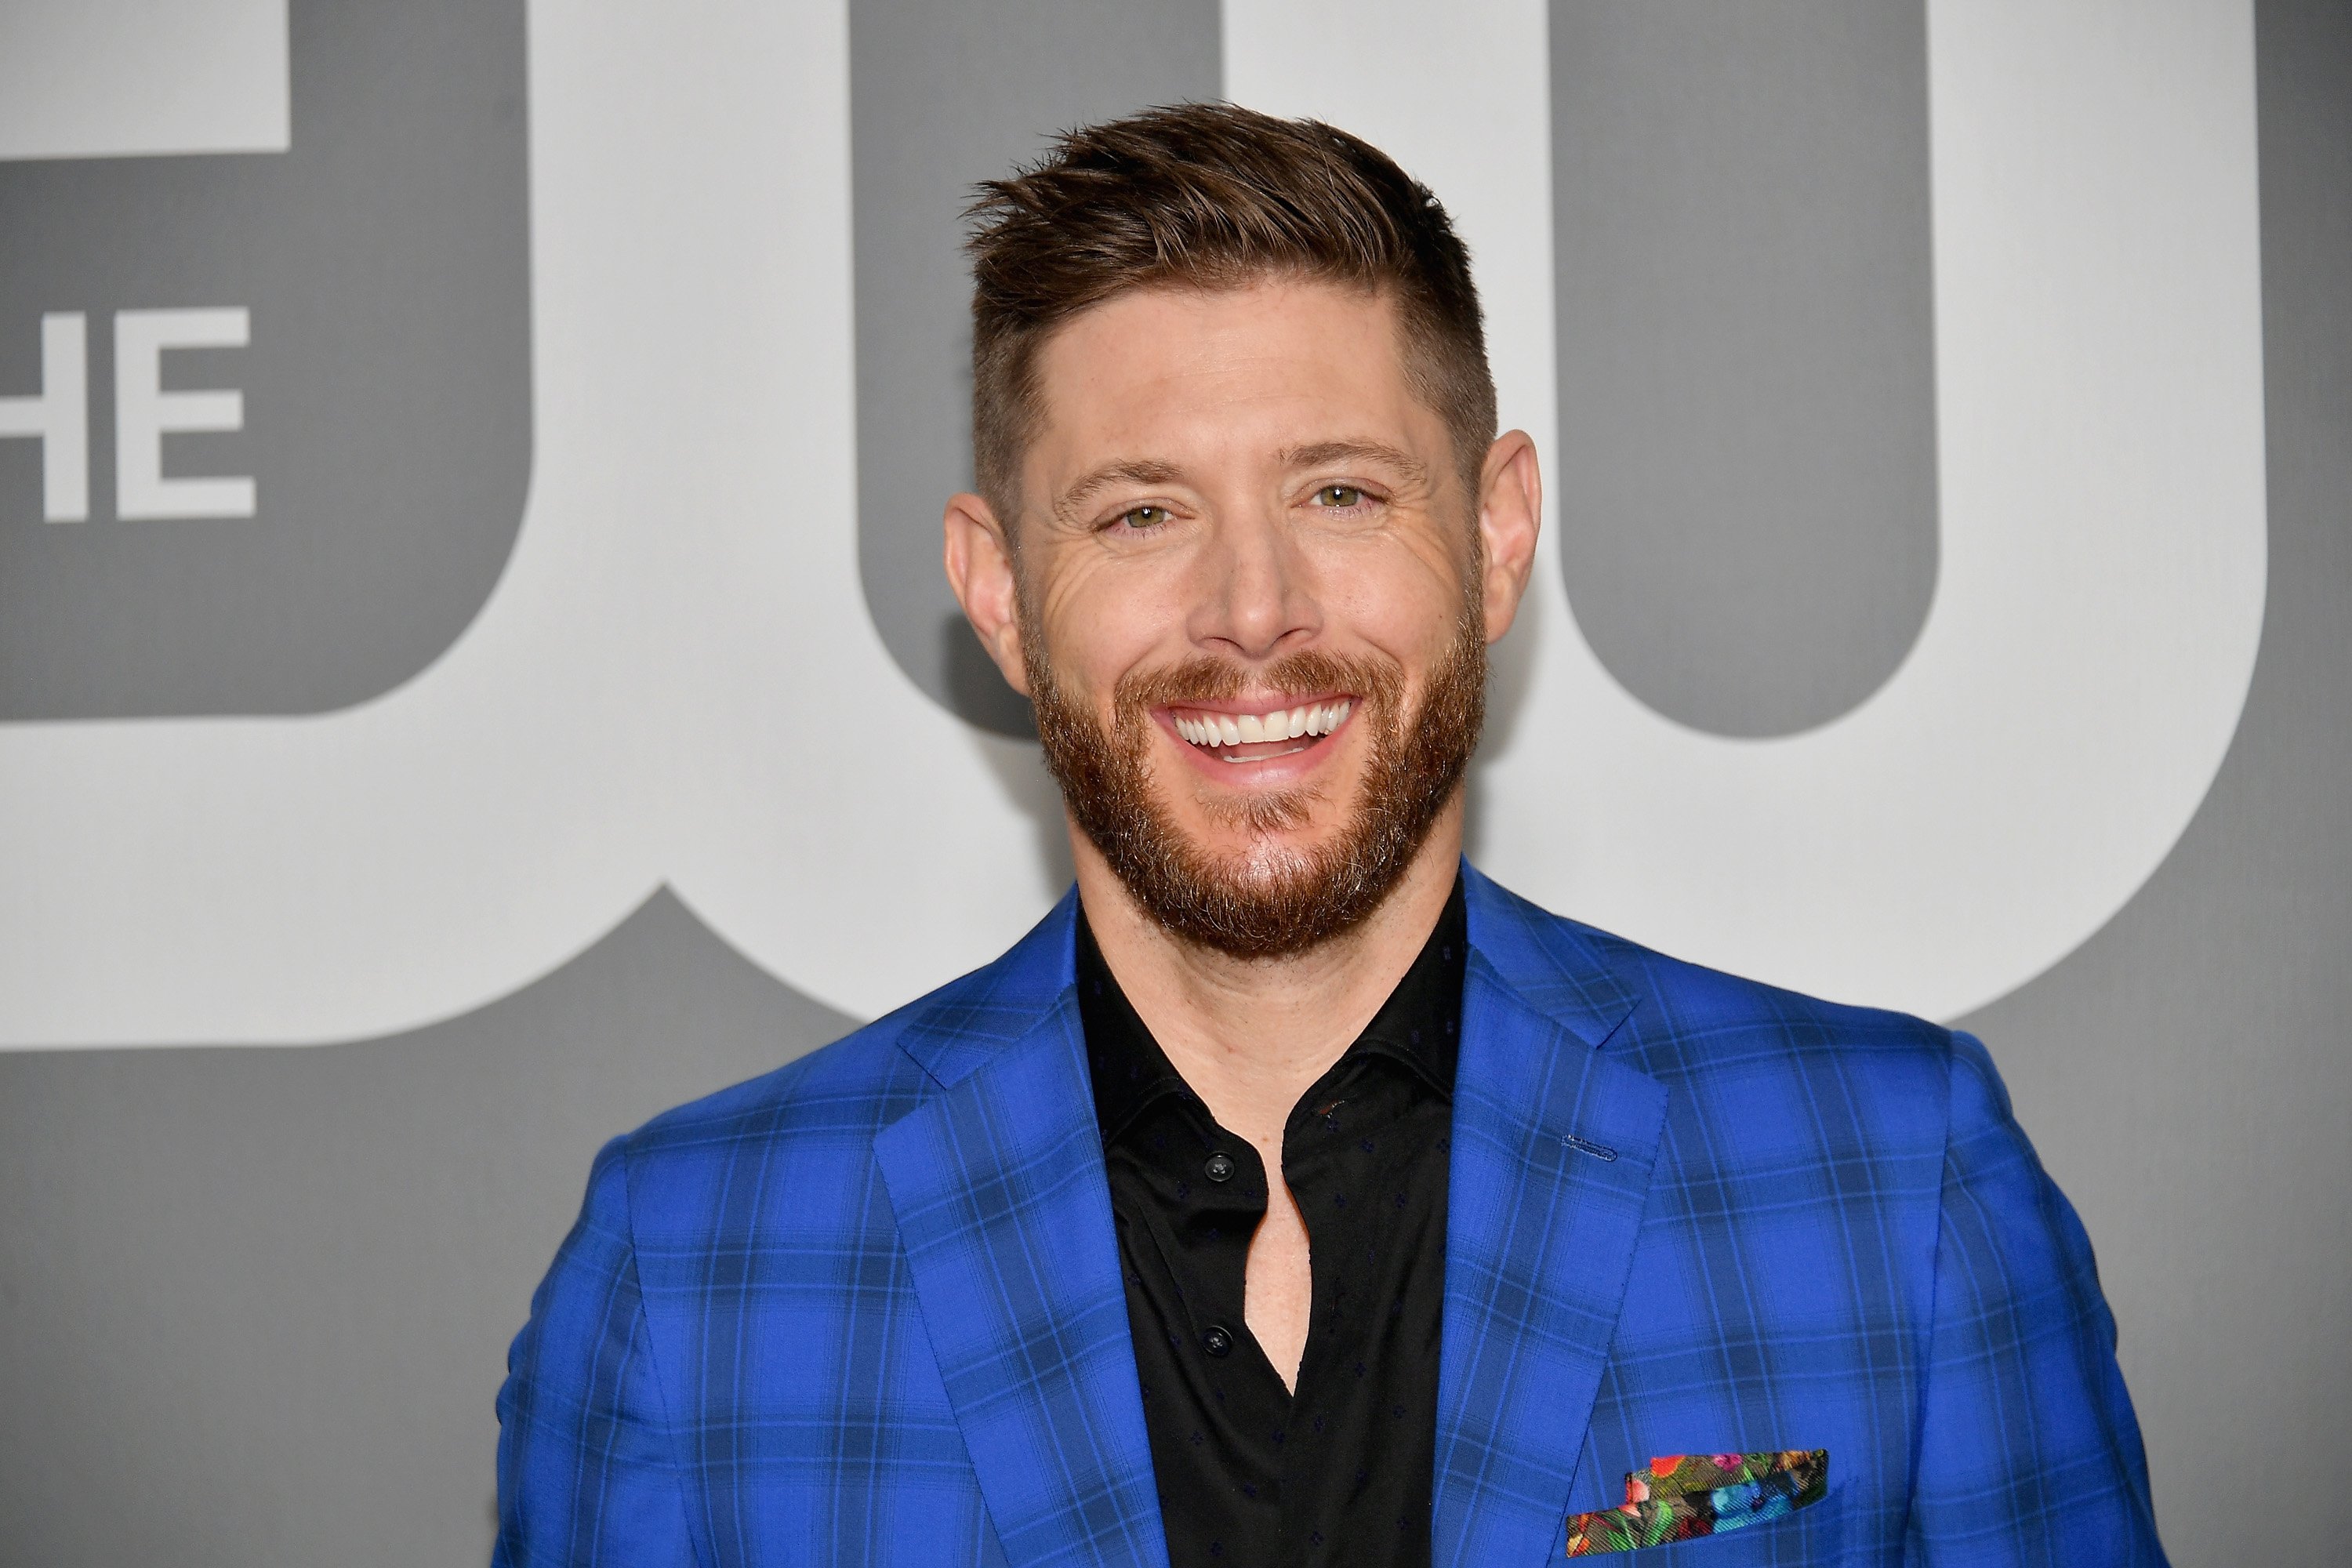 Jensen Ackles besucht das CW Network Upfront 2019 im New York City Center am 16. Mai 2019 in New York City | Quelle: Getty Images